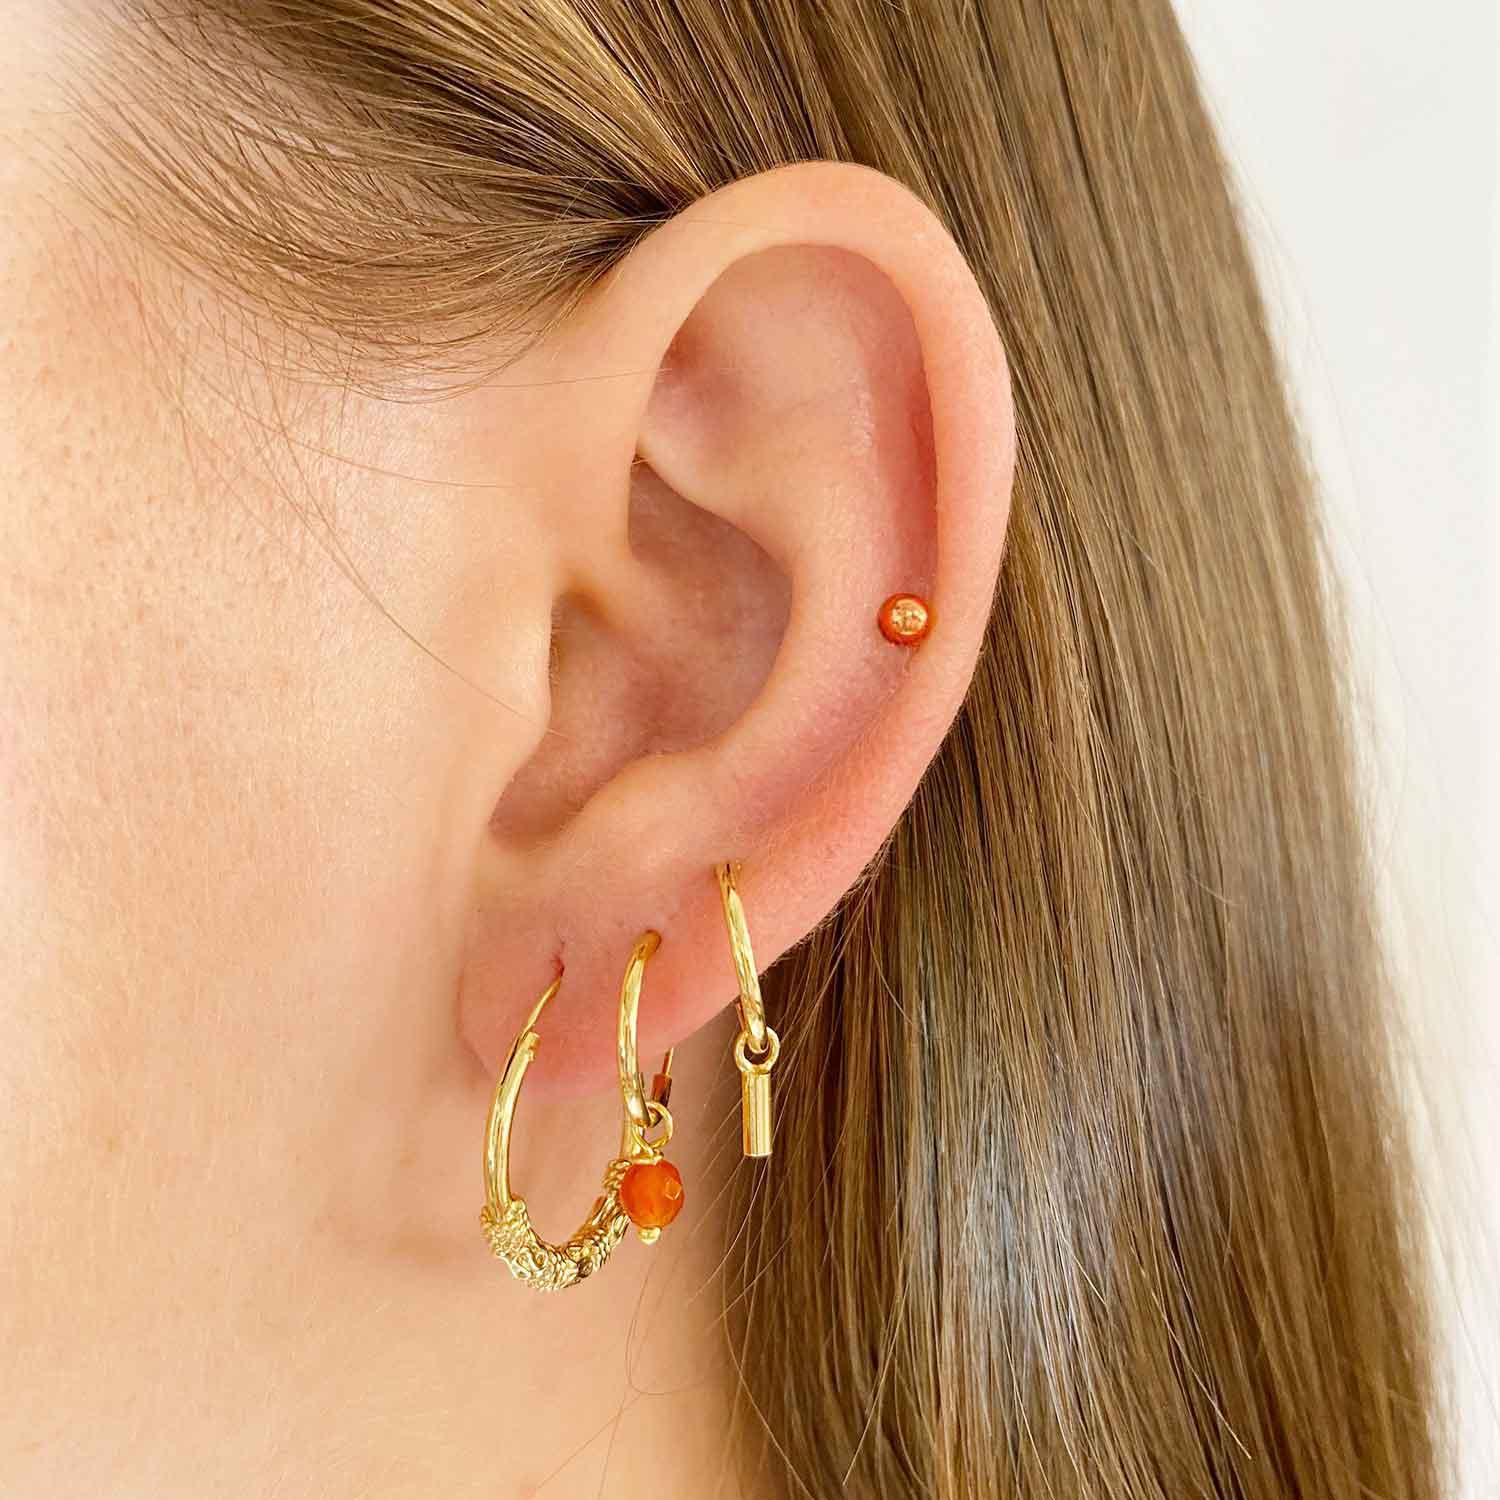 20pcs Hypoallergenic Earring Posts Stud Earrings 4mm Ball Post with Loops  Earnut Backs Silver Plated Brass Earrings Making CF217-3 : Amazon.in: Home  & Kitchen